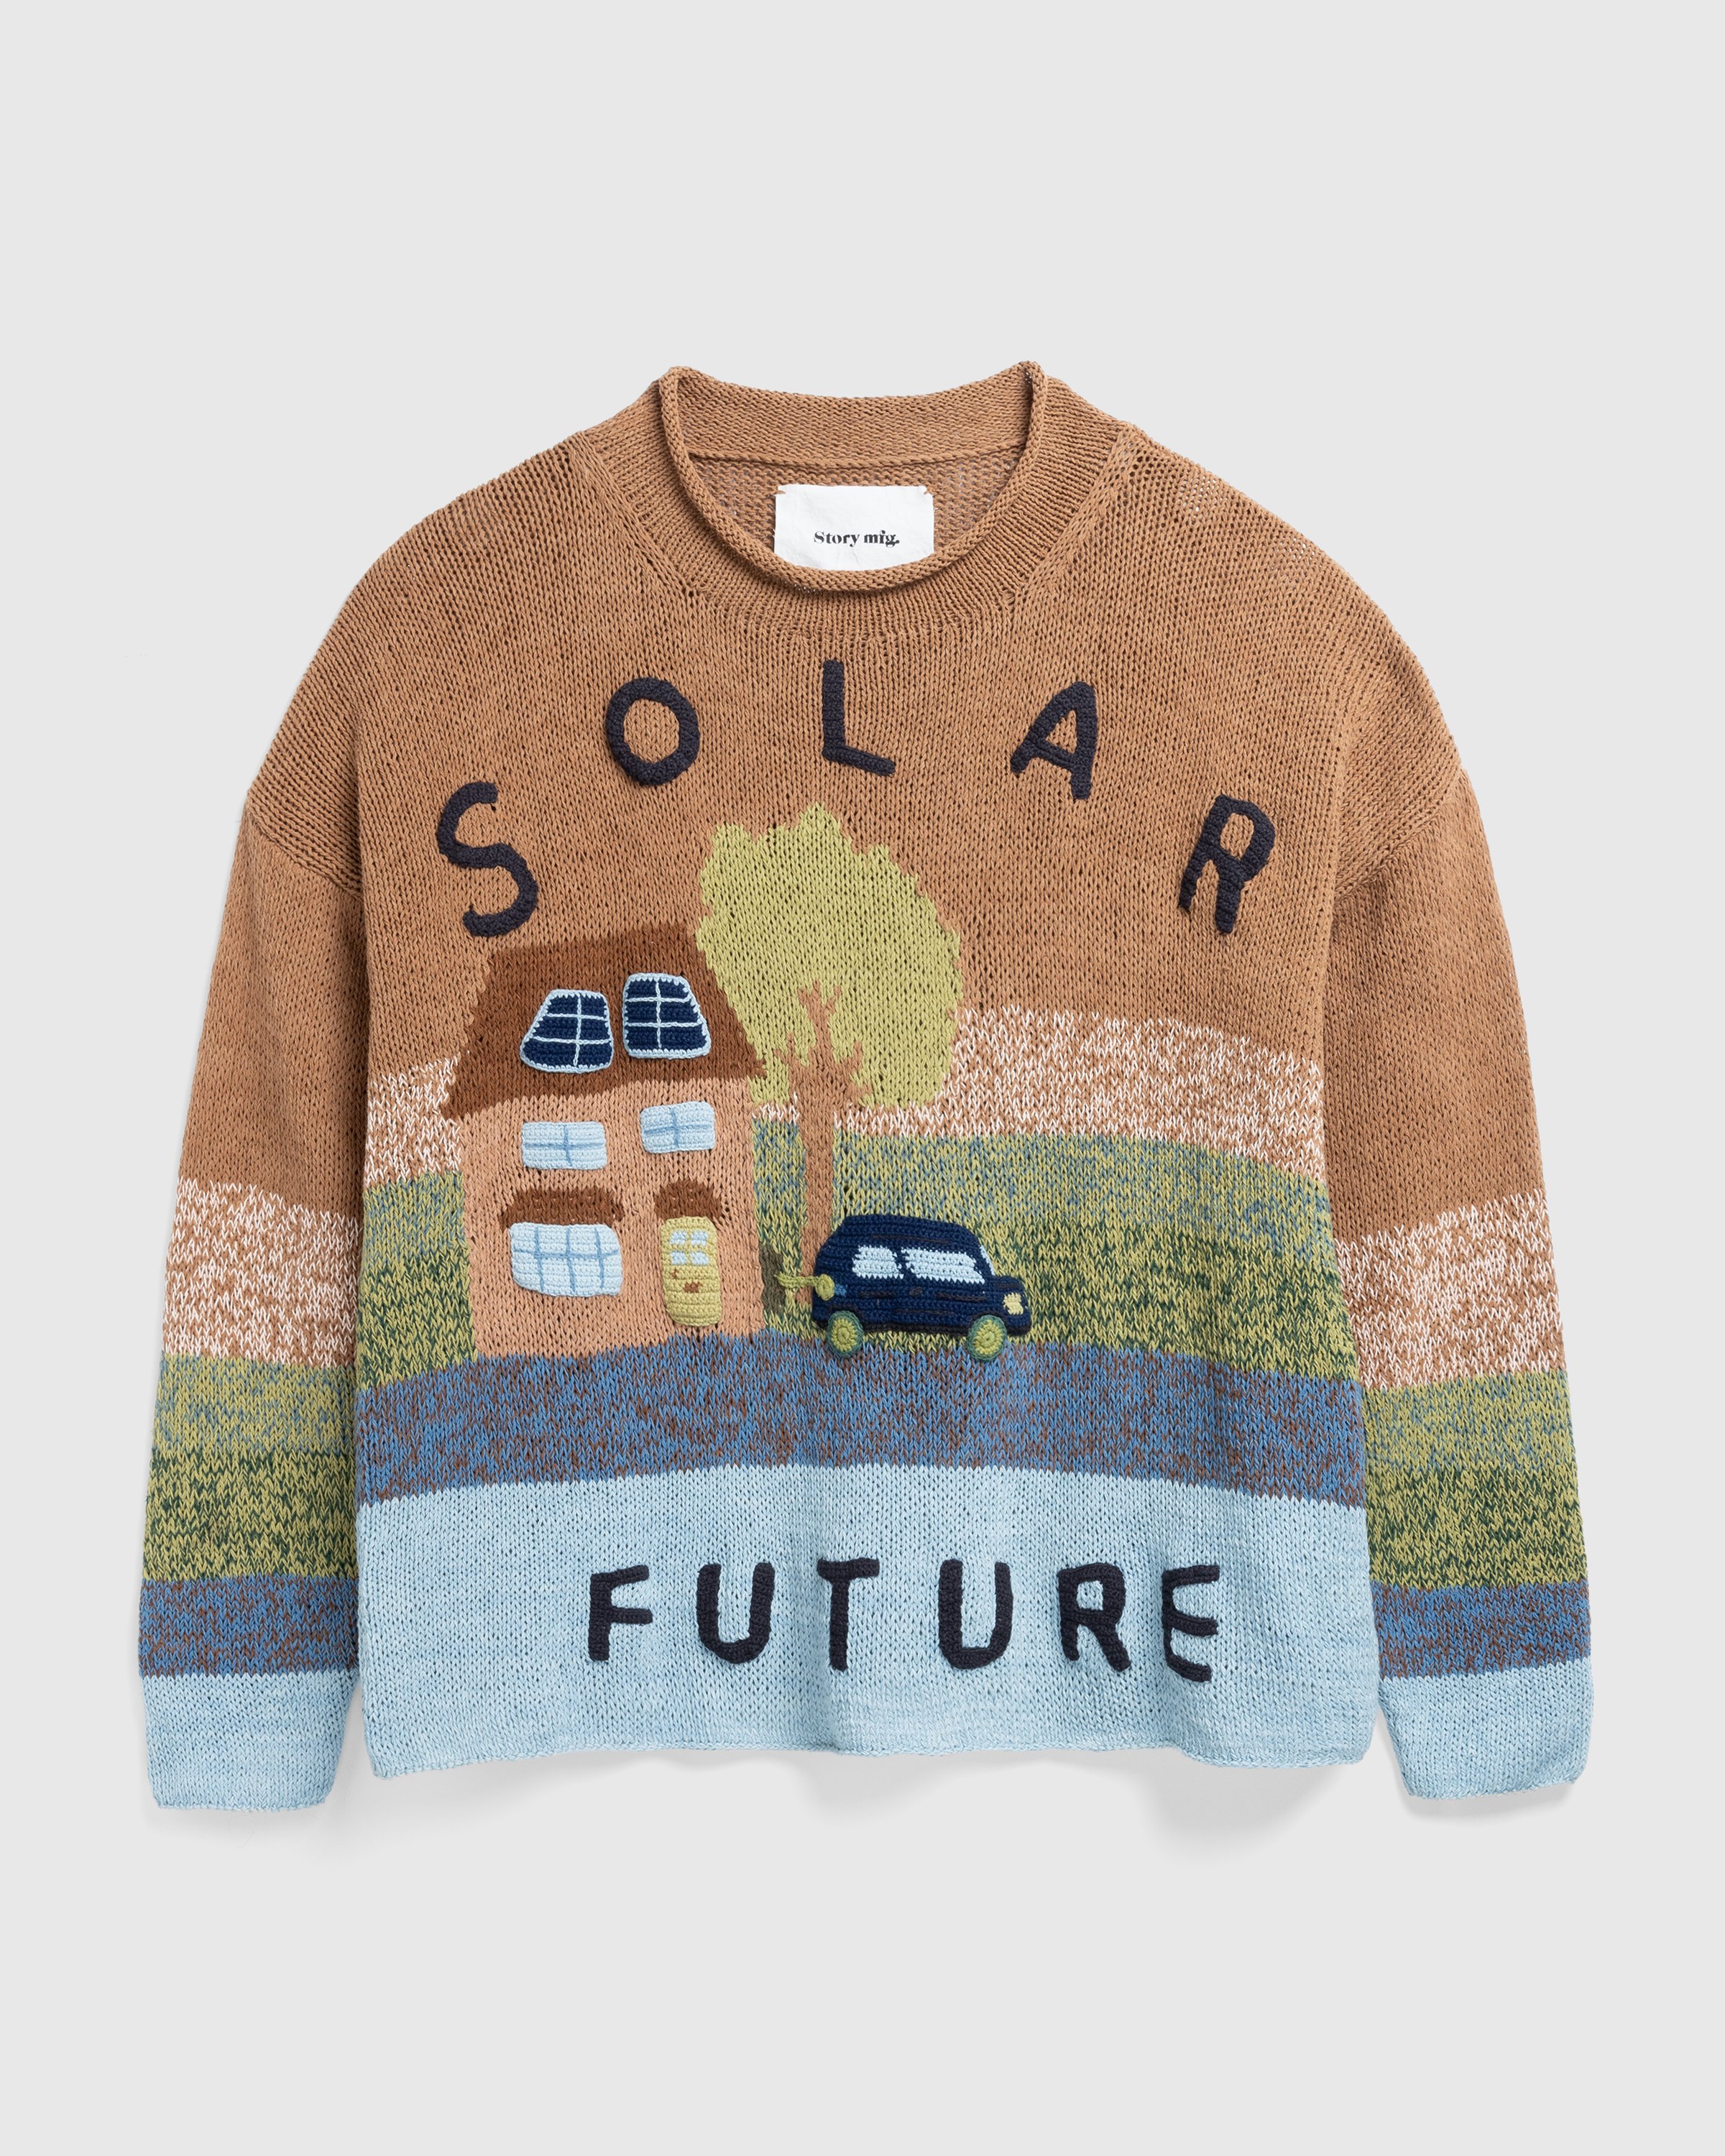 Story mfg. - Twinsun Rollneck Clay Solar Future - Clothing - Multi - Image 1